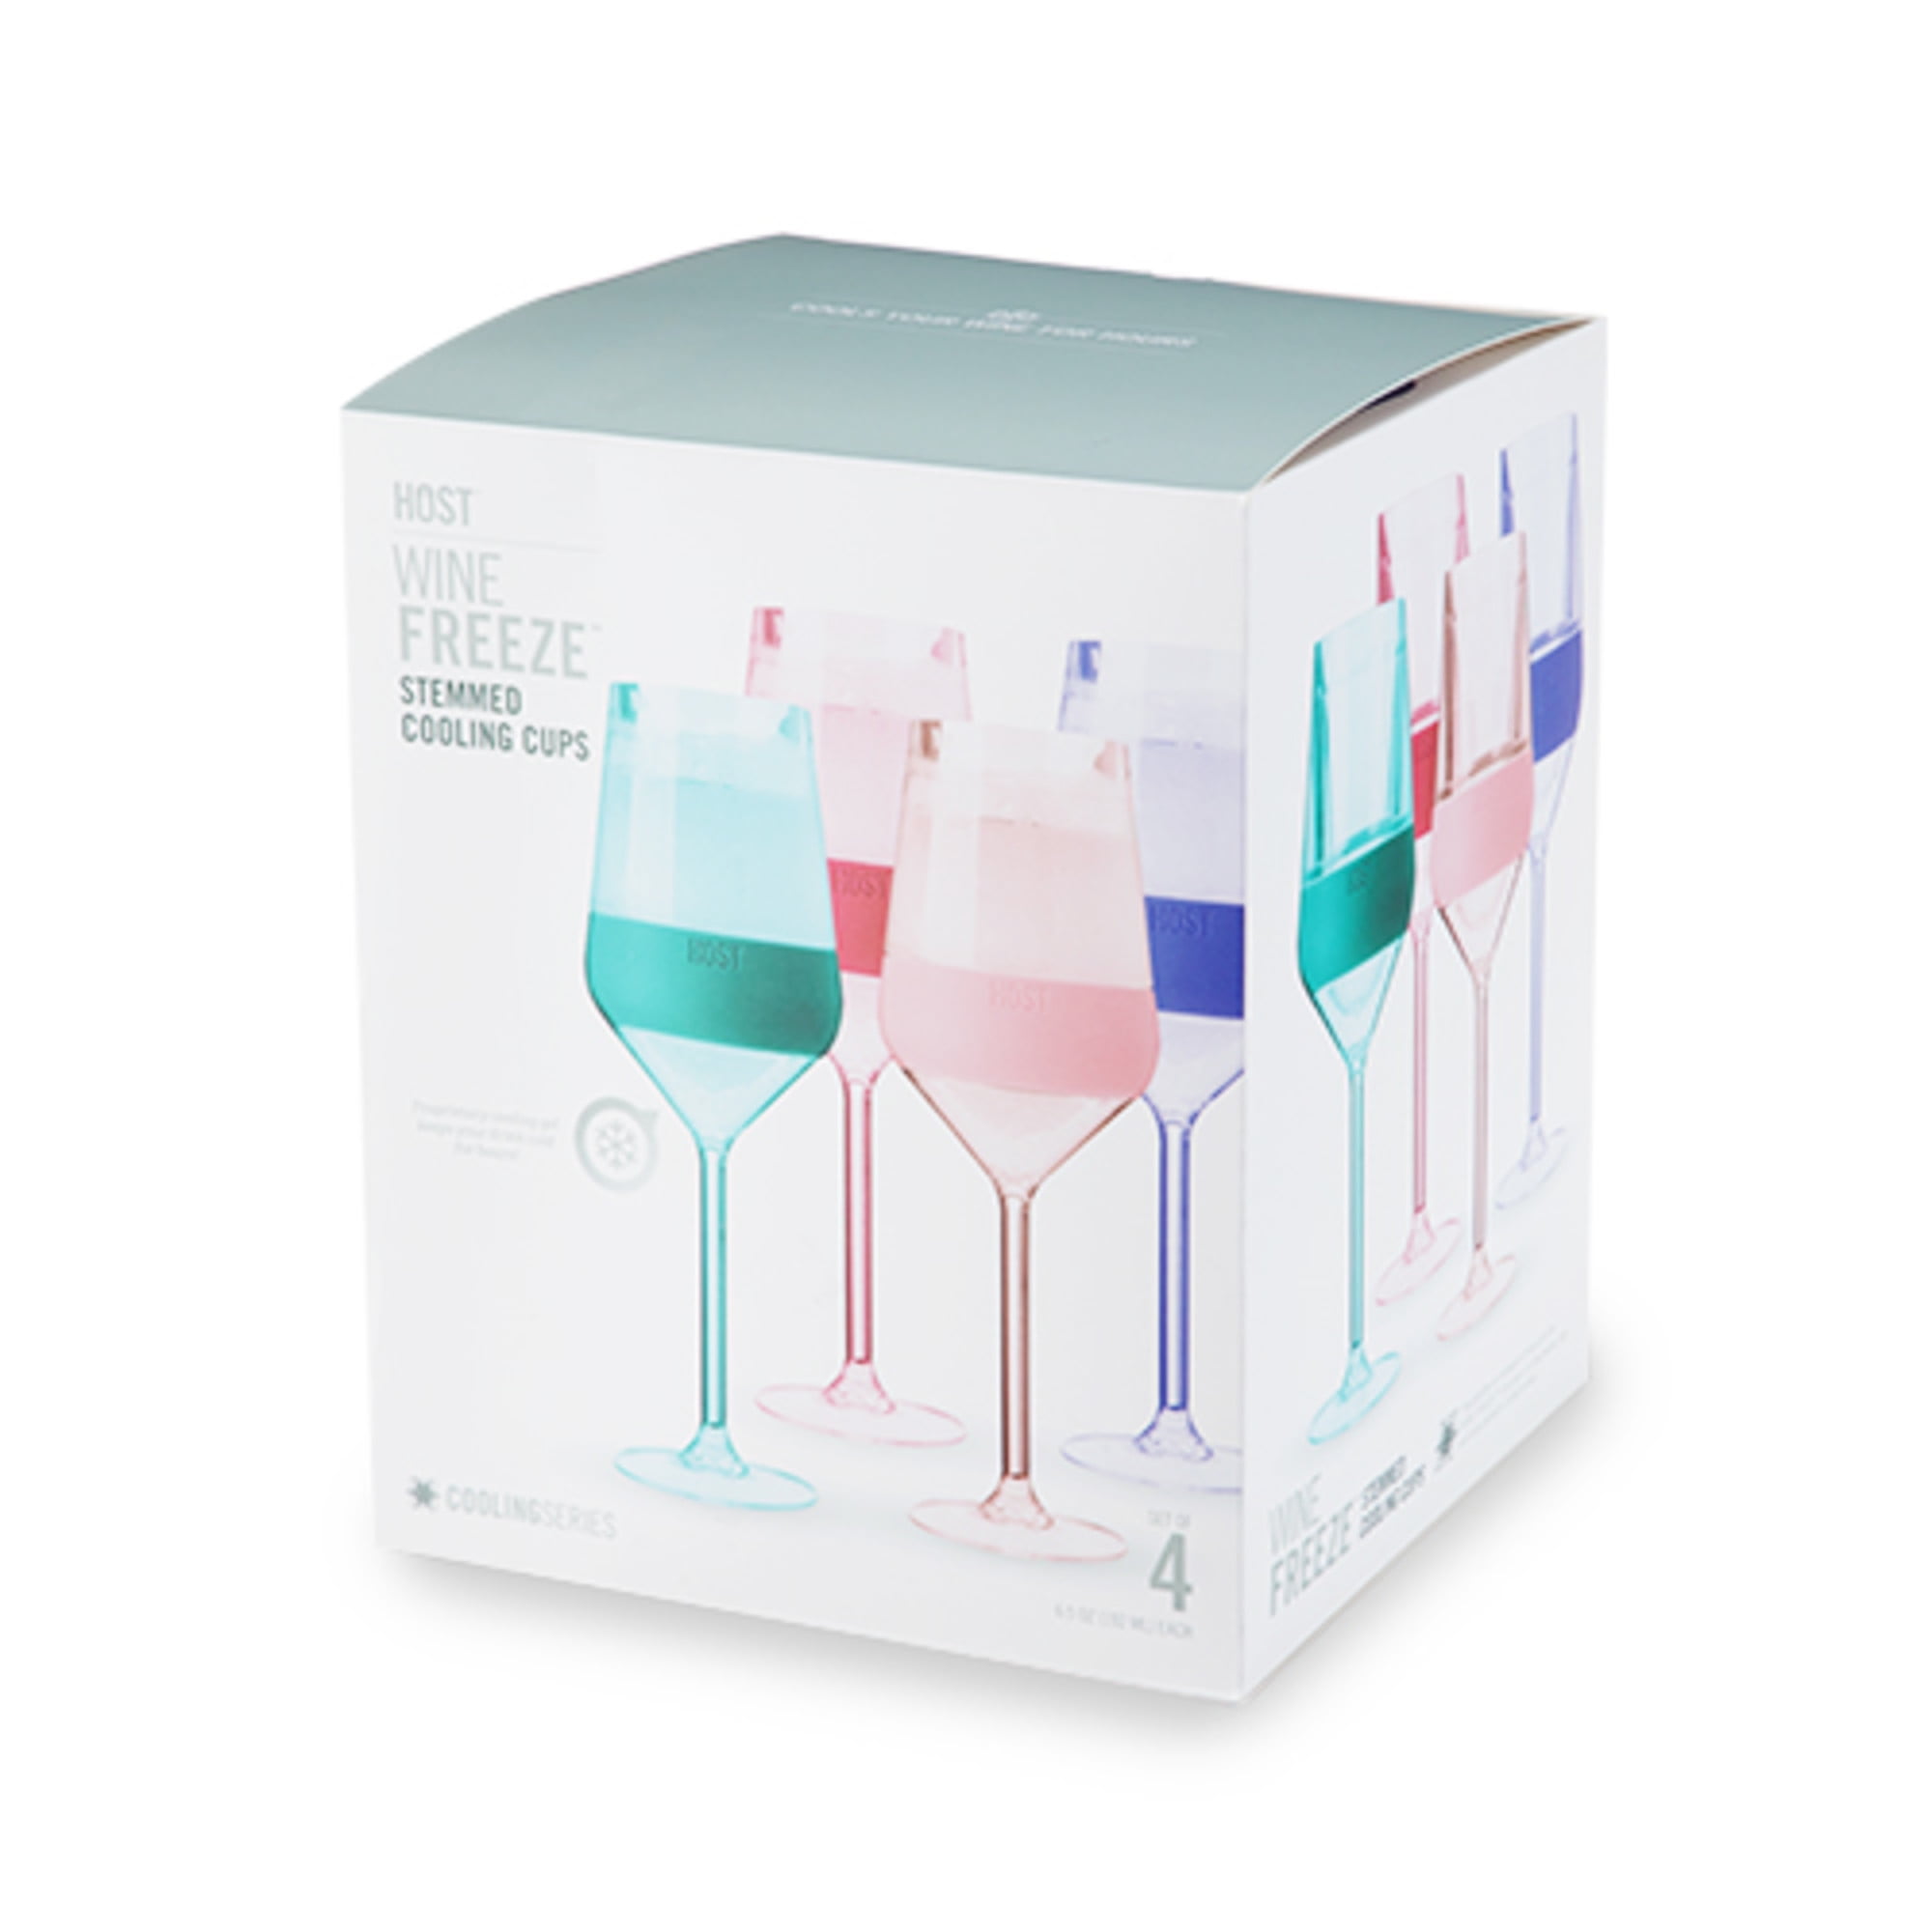 TRUE FABRICATIONS Wine Glass Freeze Cooling Set of 2, 1 EA: Wine  Glasses